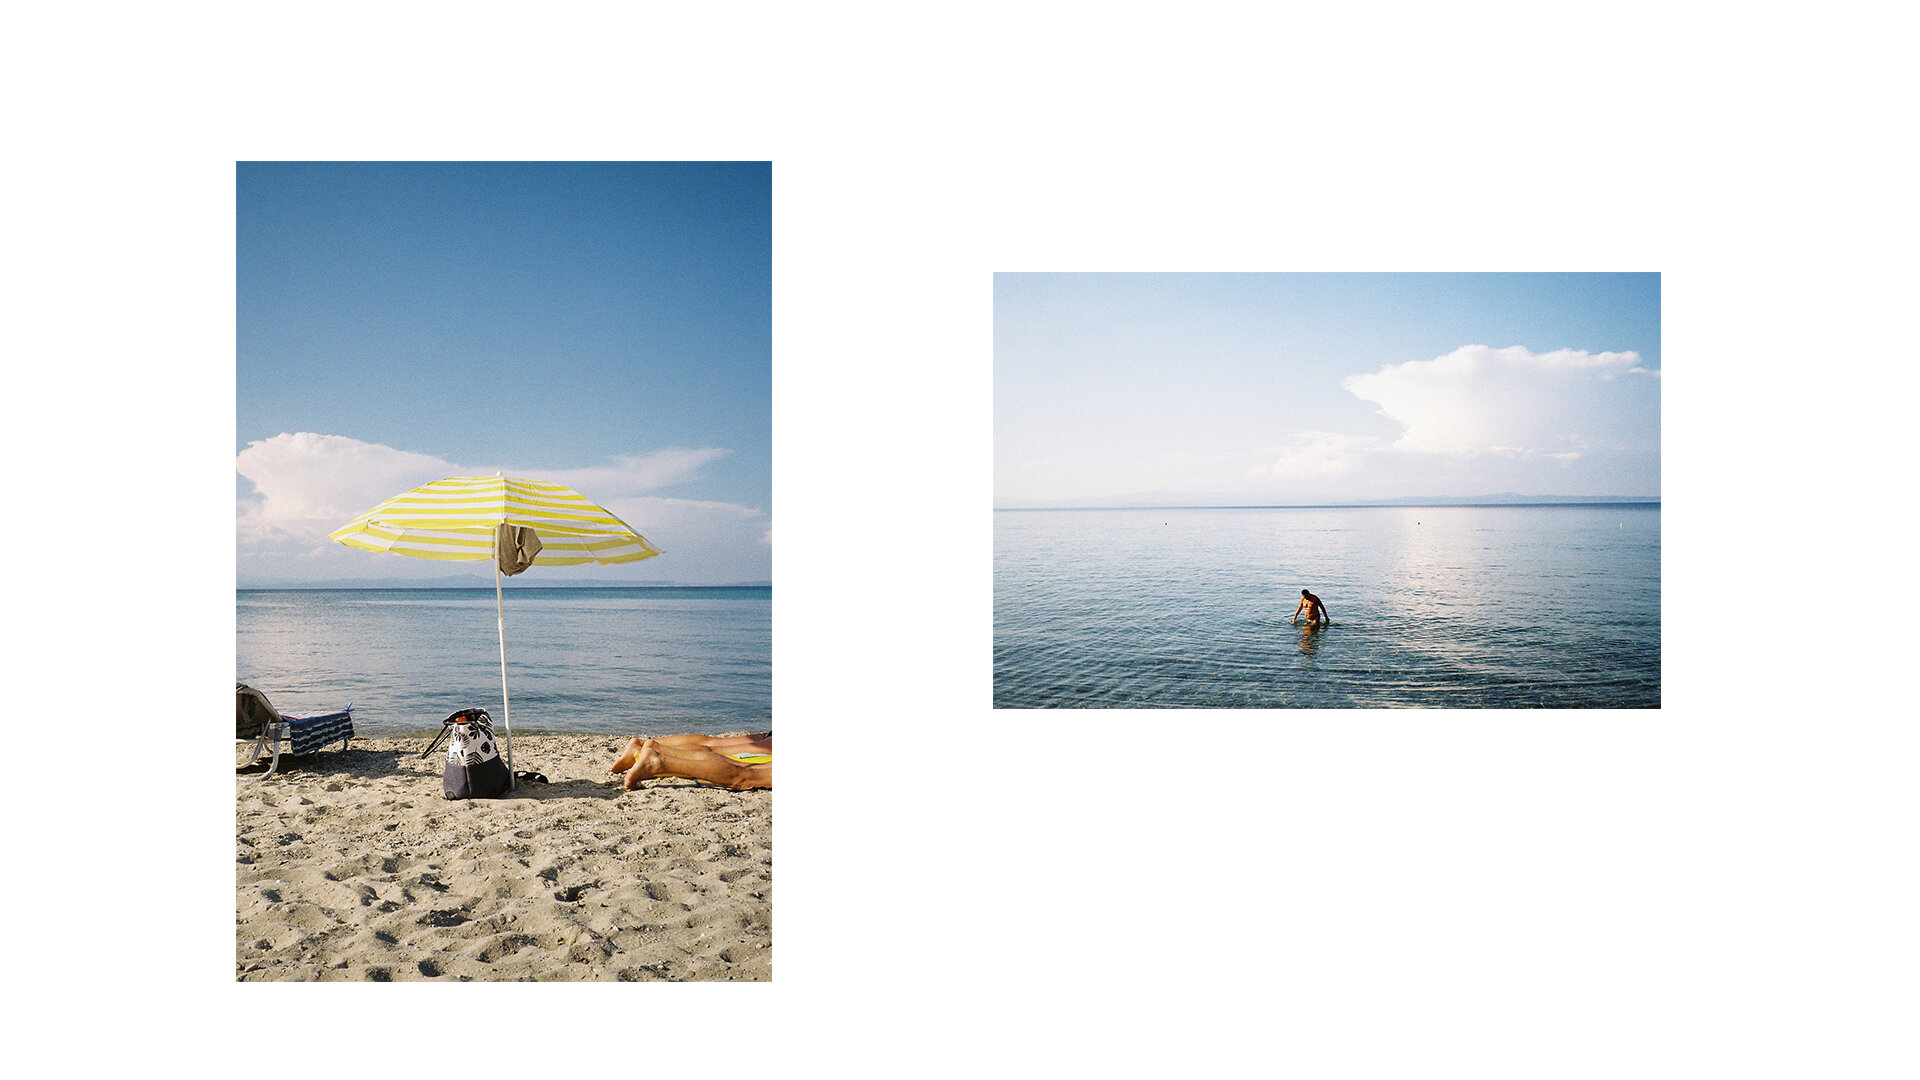 toby-butler-photo-tobybutlerphoto-lifestylephotography-travel-travelphotography-lifestyle-tourism-greece-film-35mm-magazine-europe-mediterranean-ocean-5.jpg